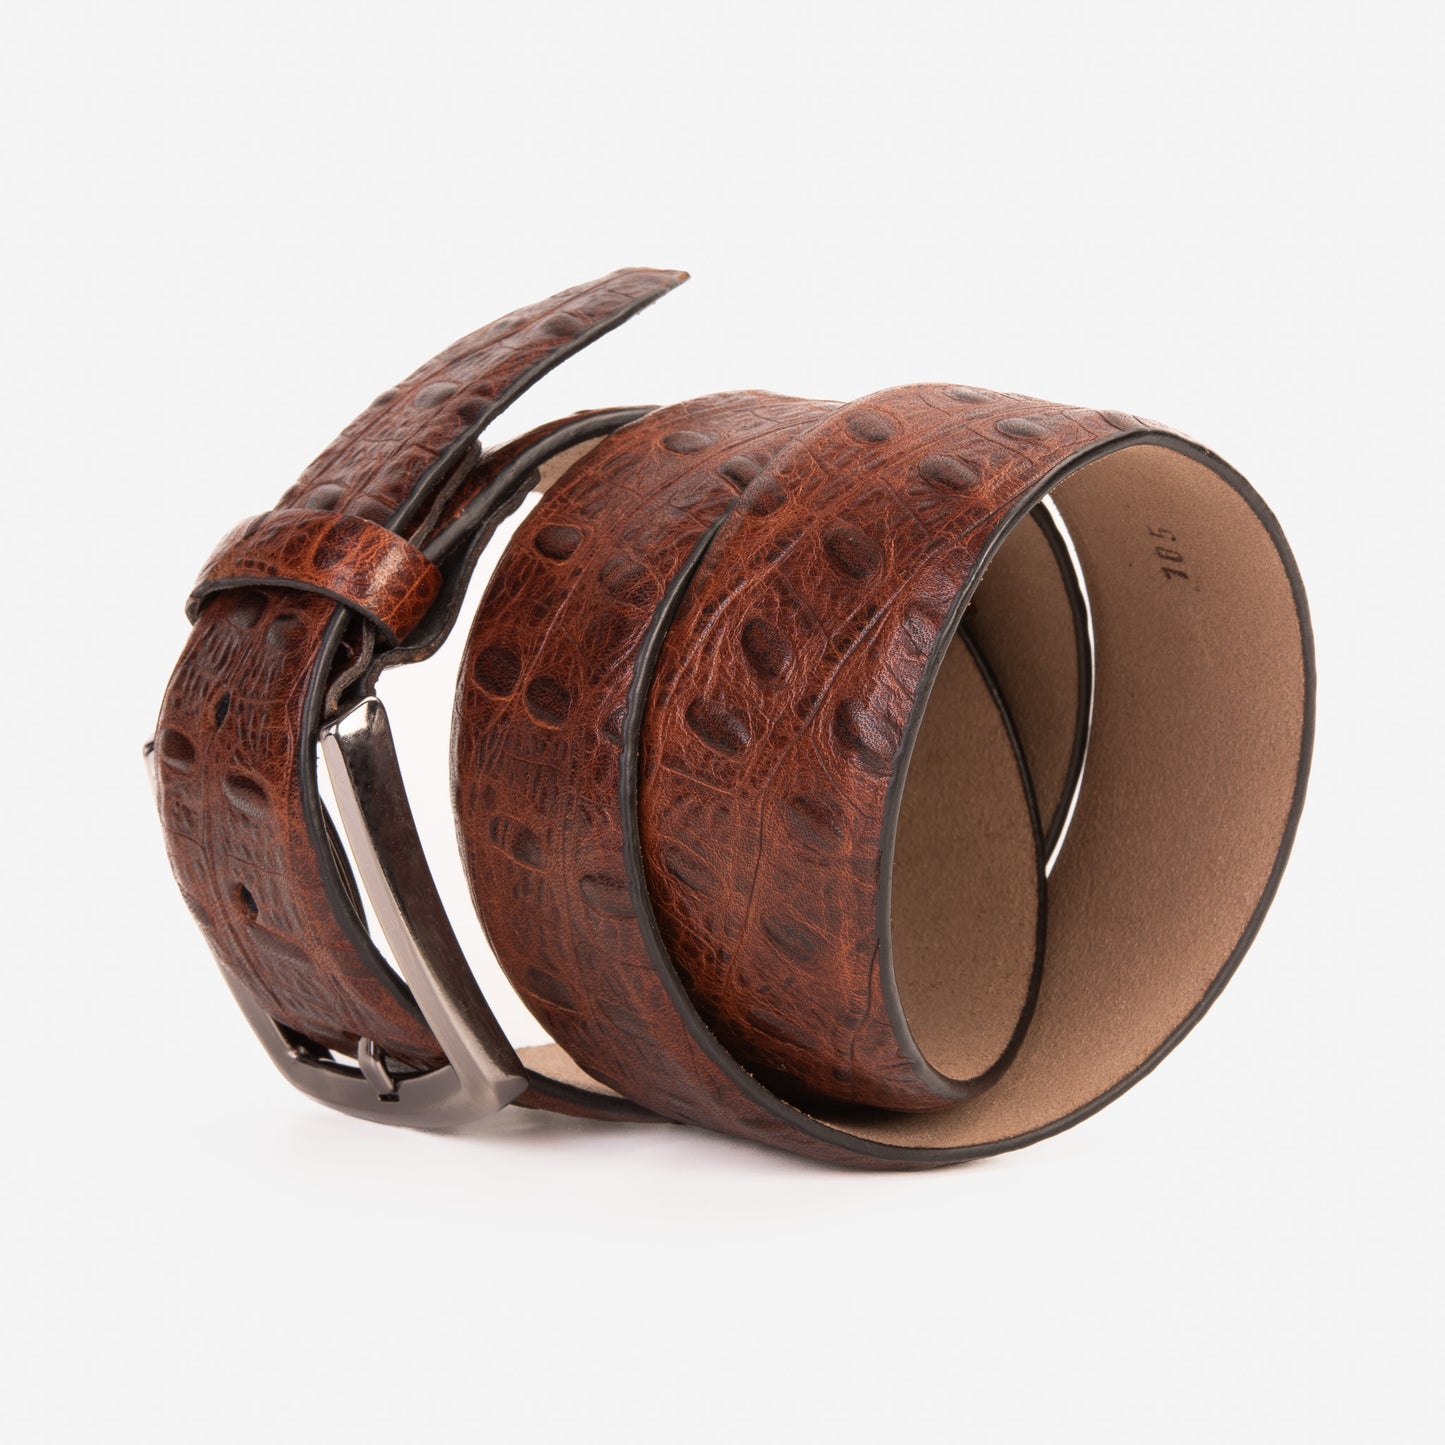 The Randor Brown Leather Belt